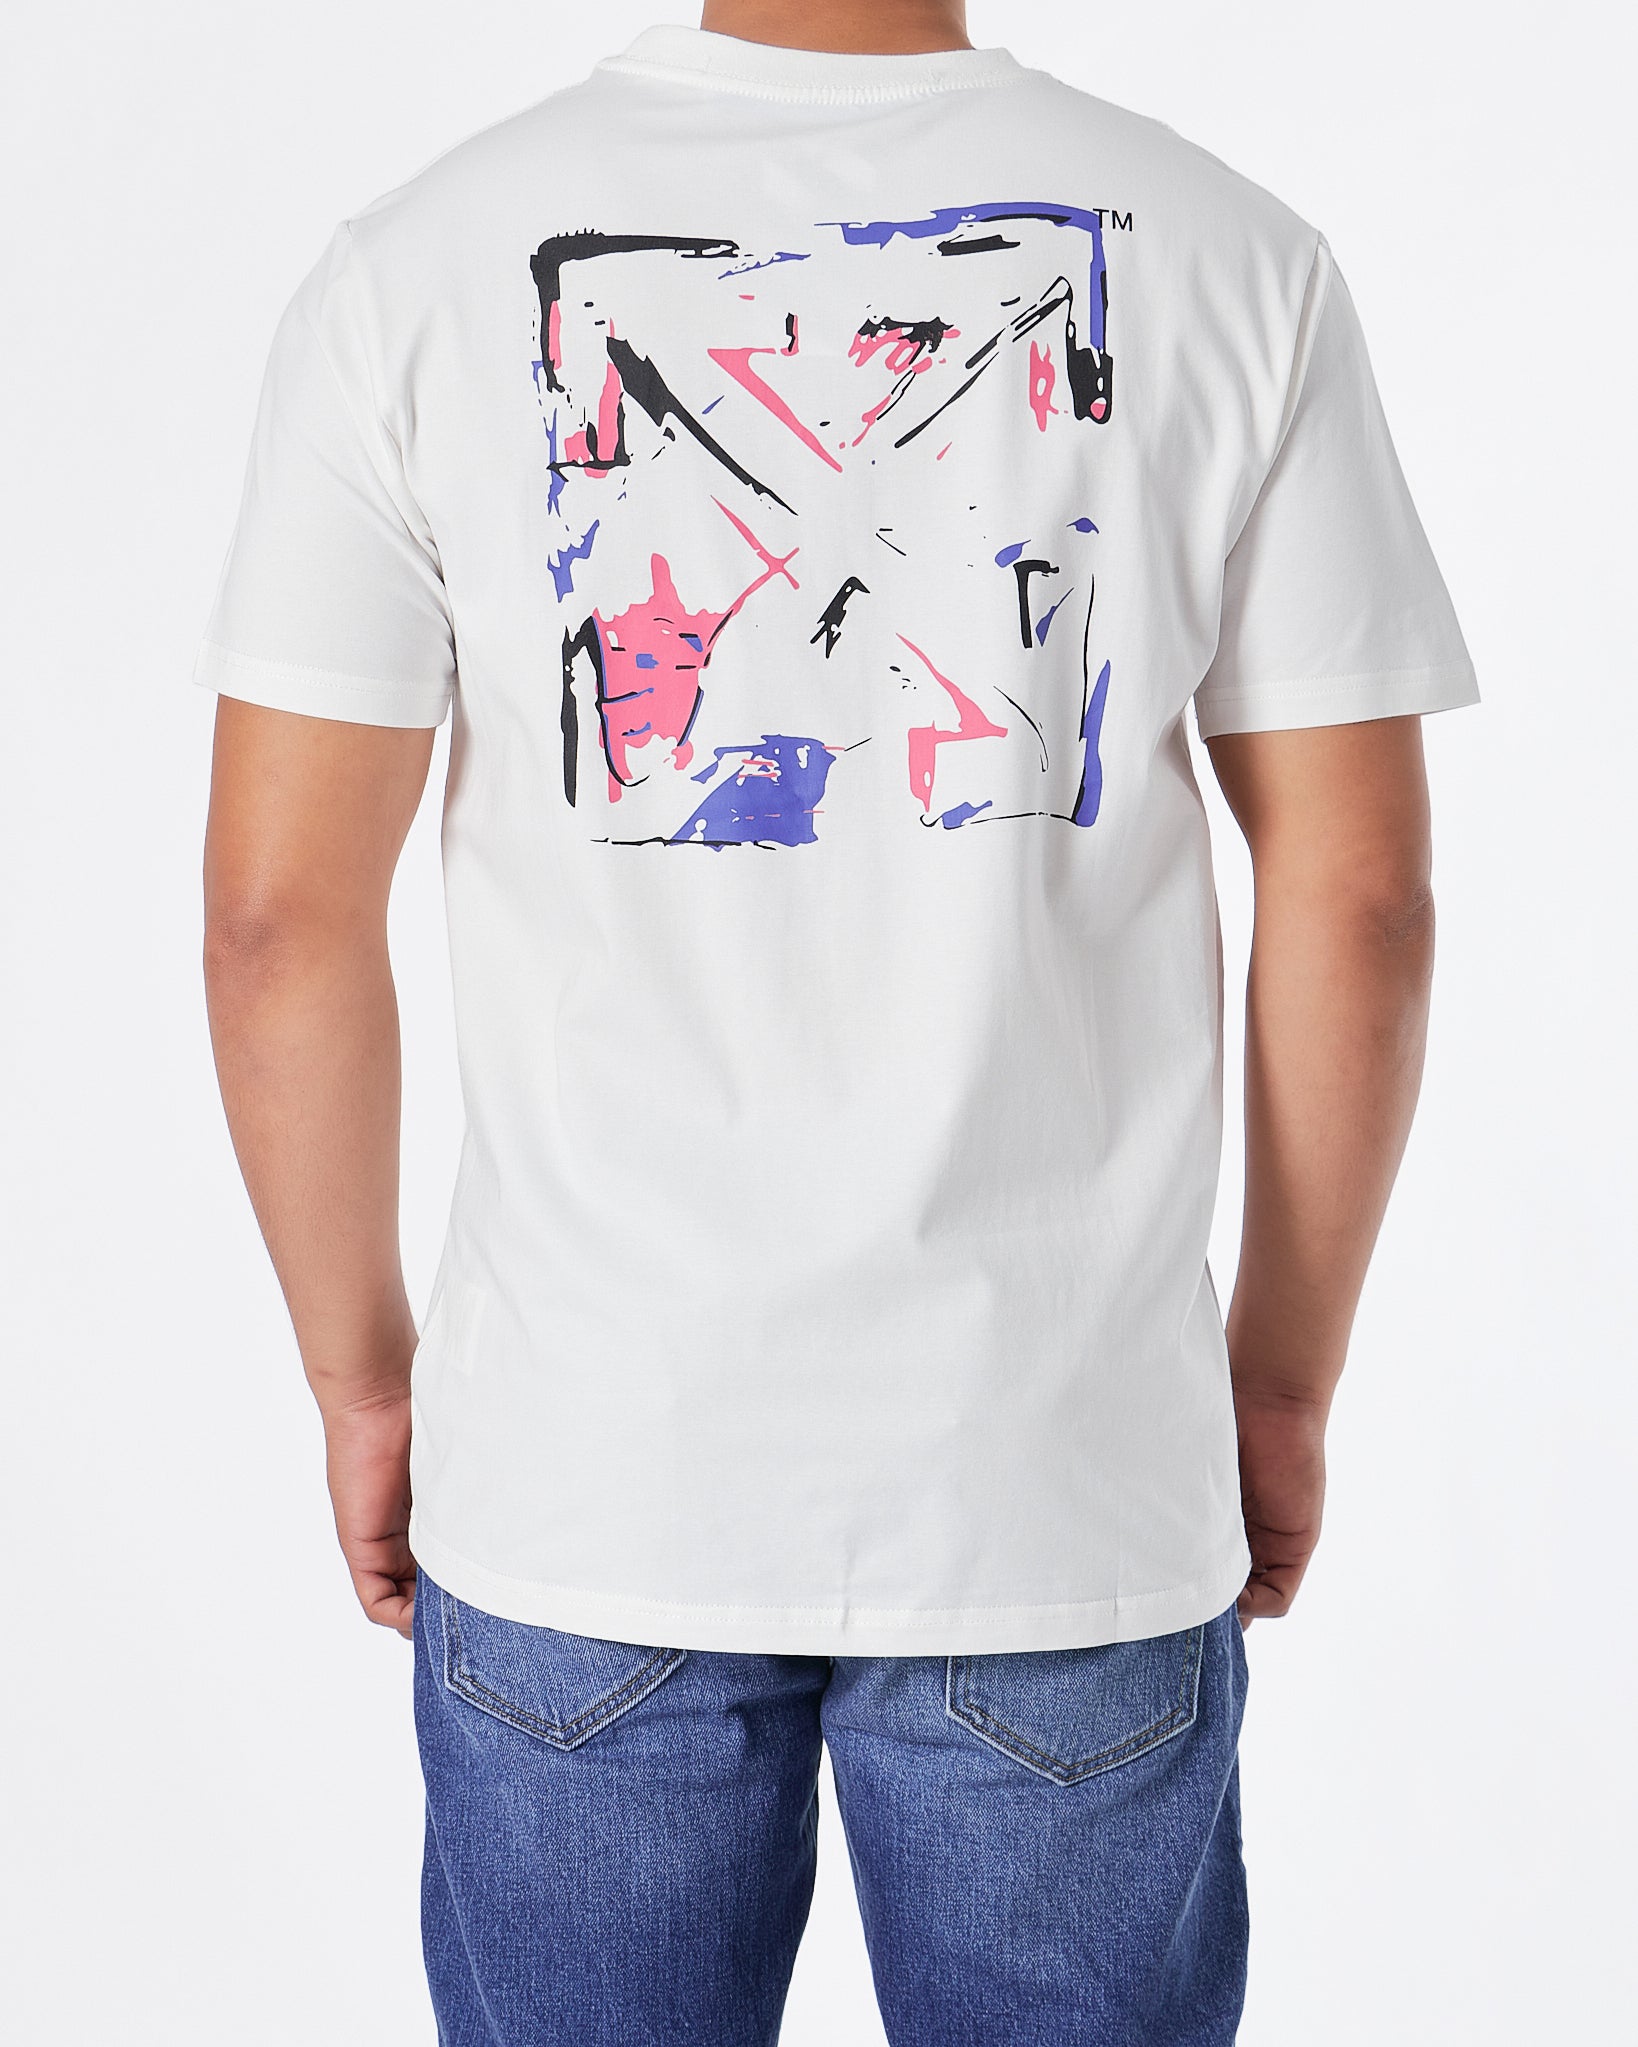 OW Cross Arrow Graffiti Back Printed Men White T-Shirt 20.90